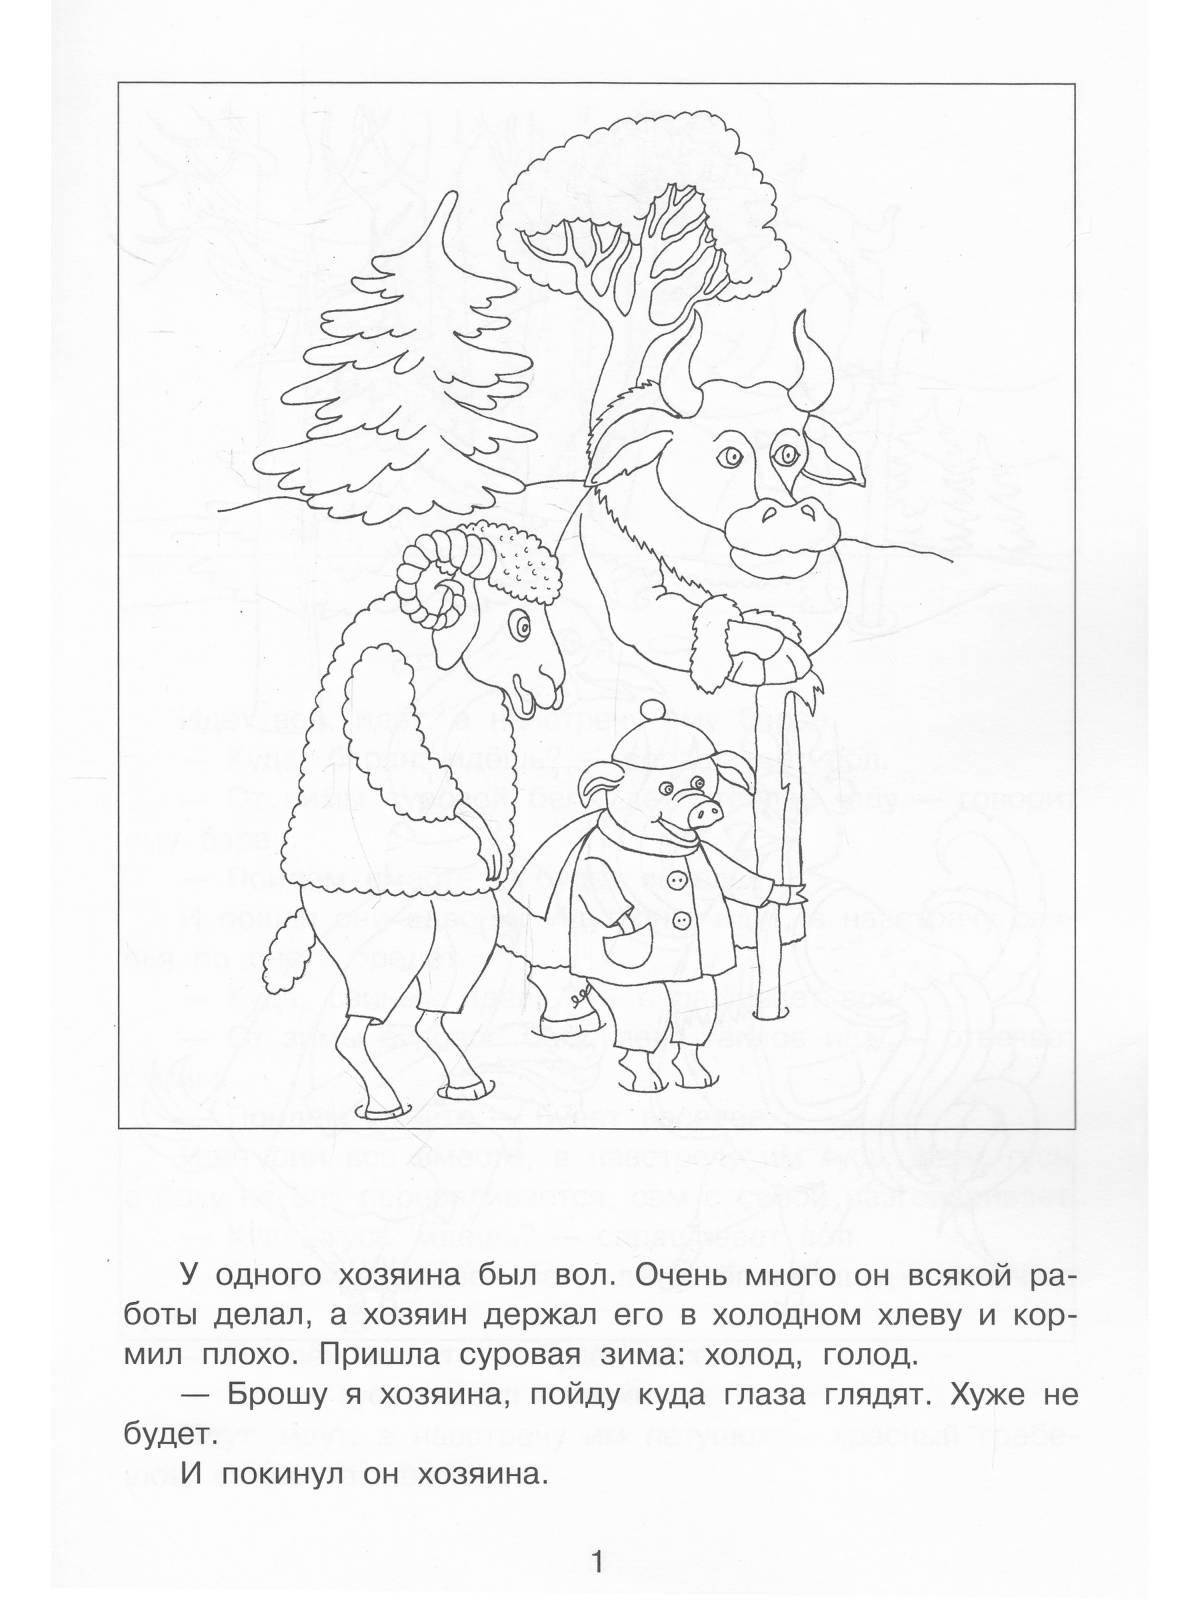 Bright coloring winter hut of animals Russian folk tale